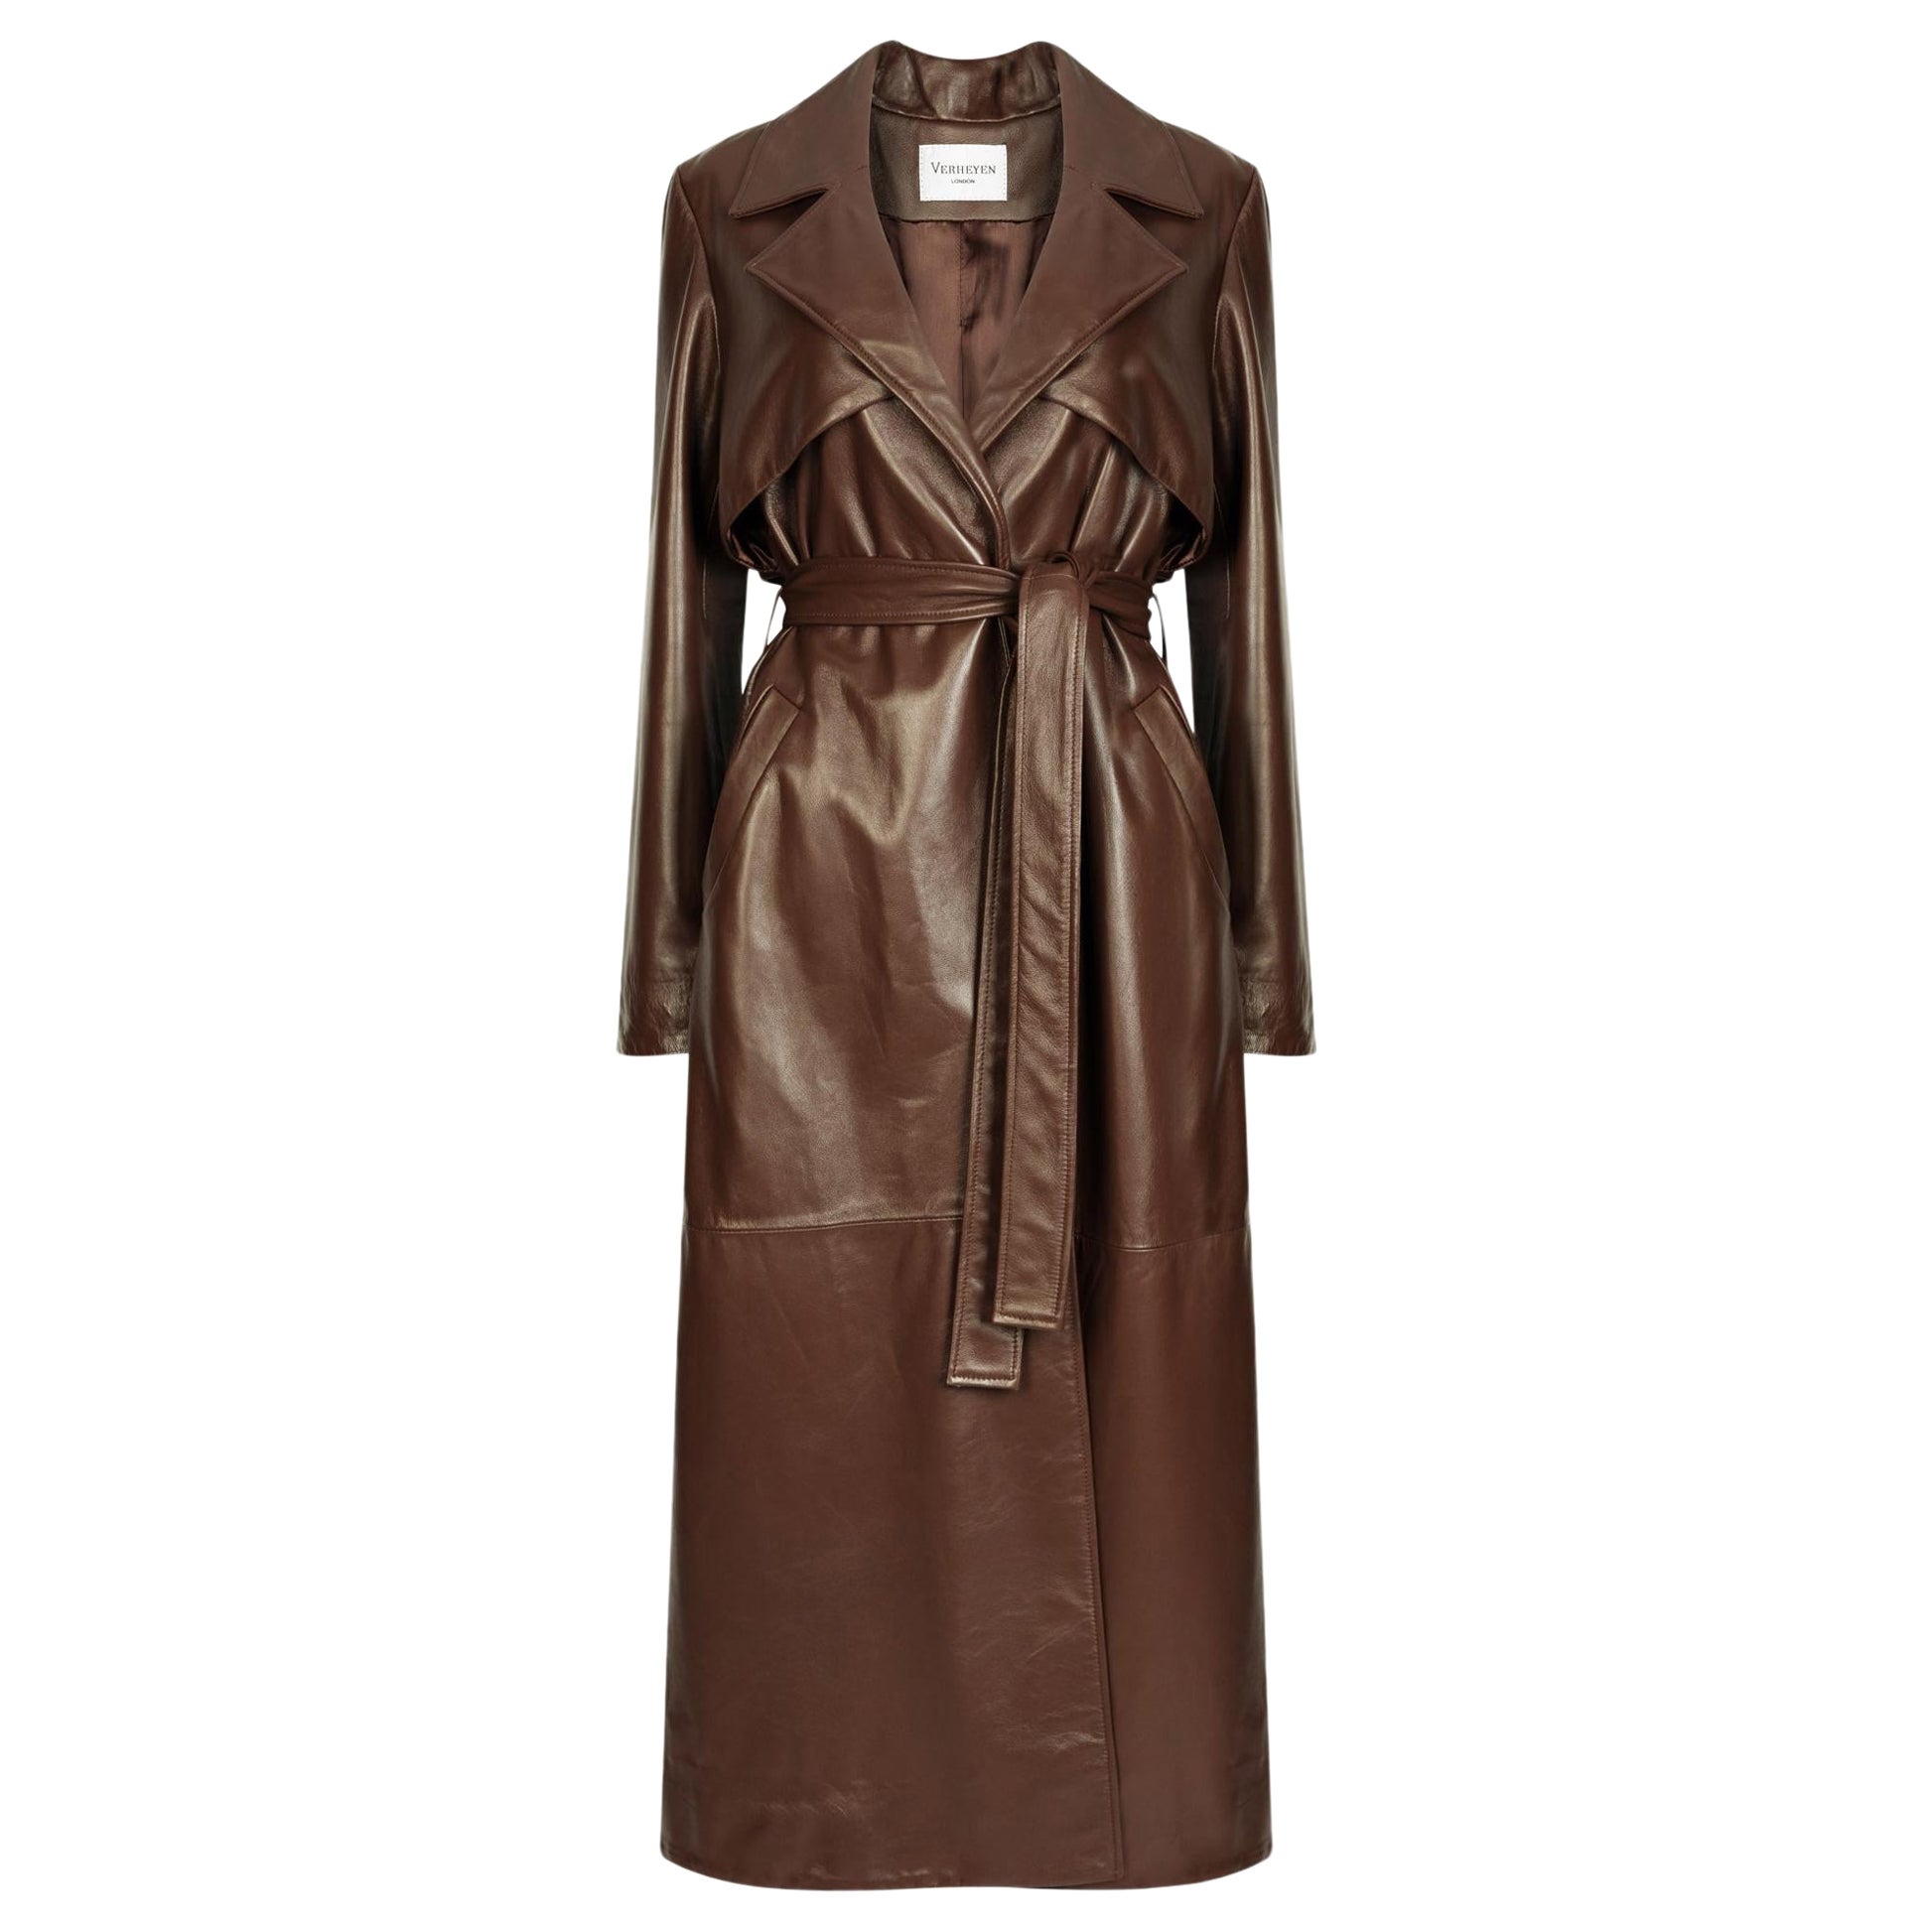 Verheyen London Leather Trench Coat in Chocolate Brown - Size uk 8